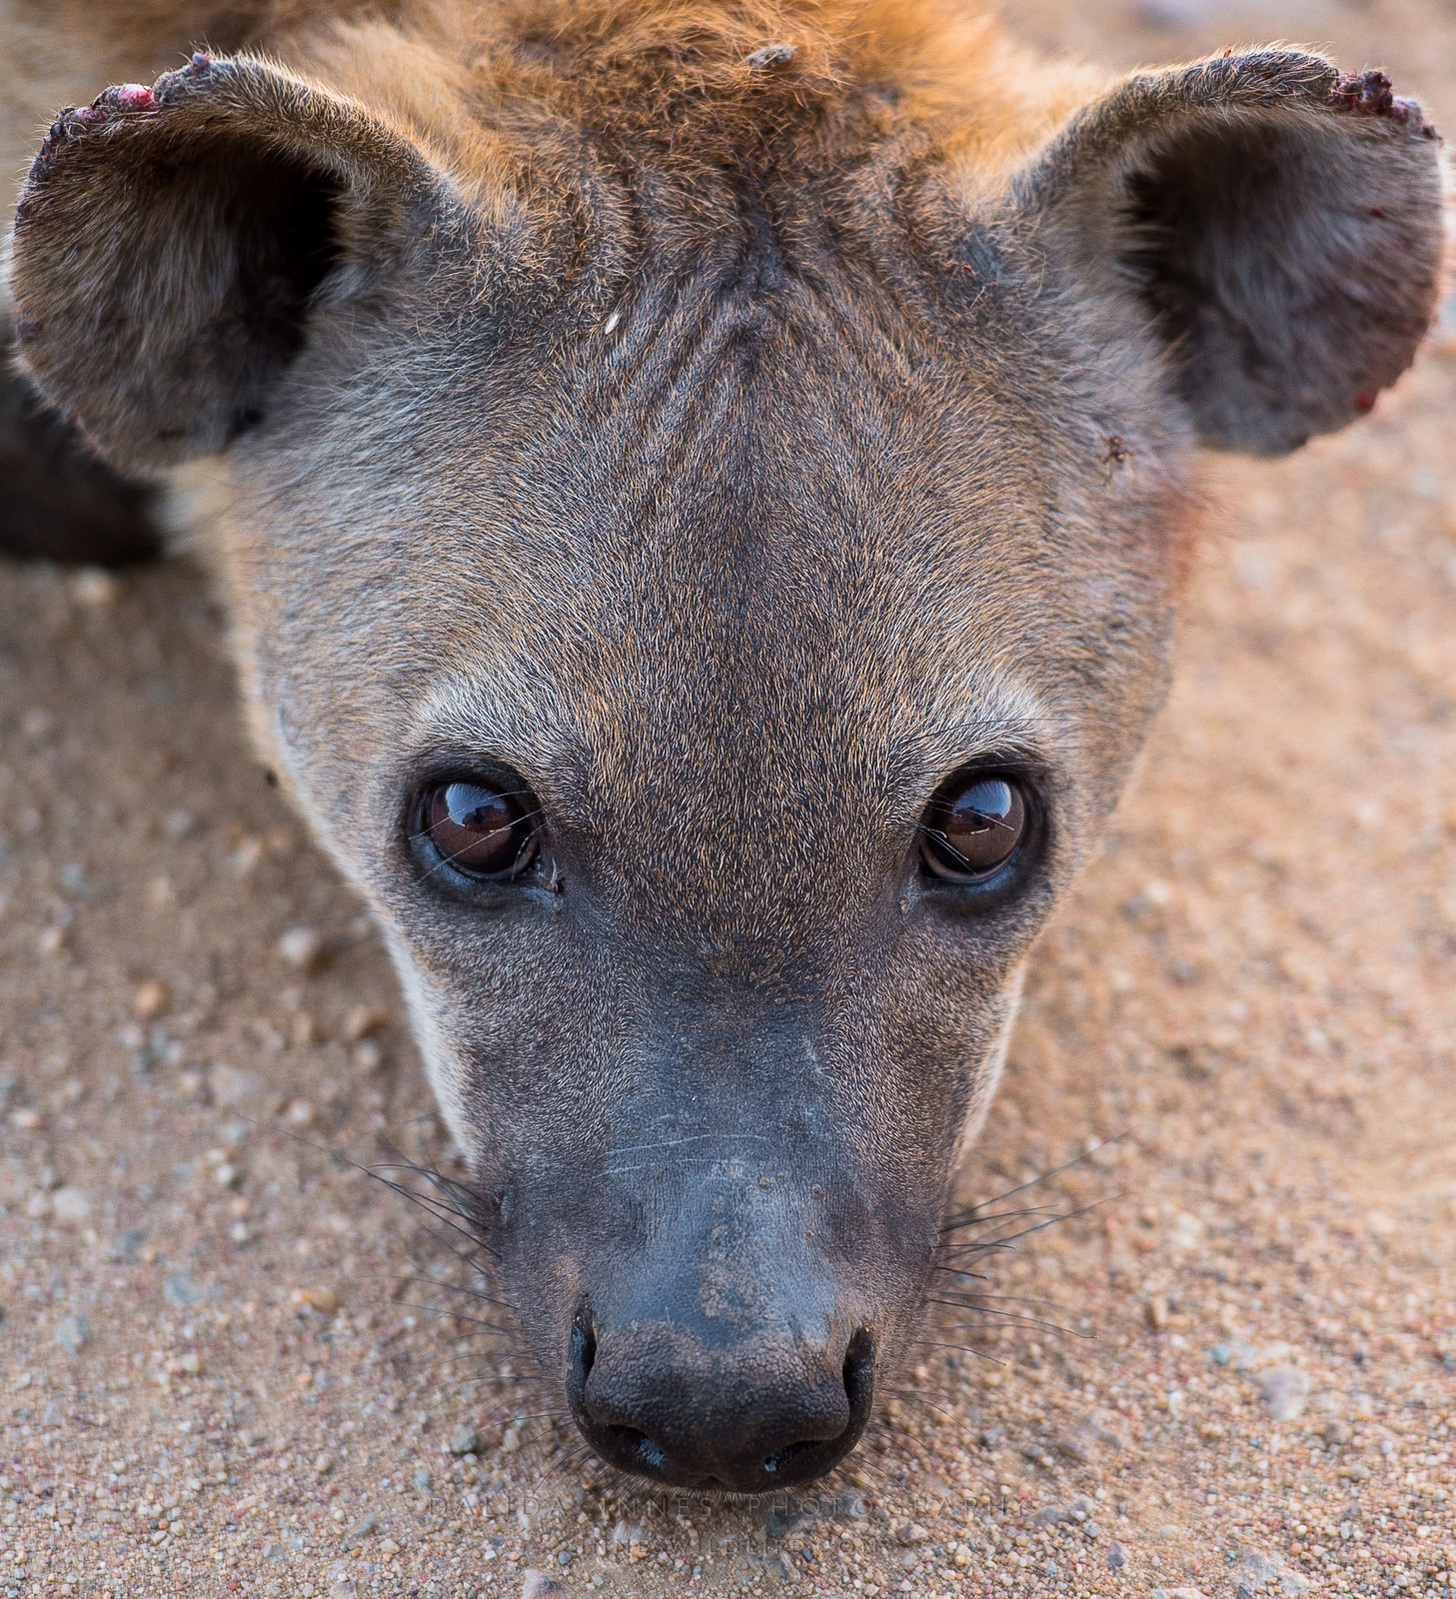 Portrait of a hyena